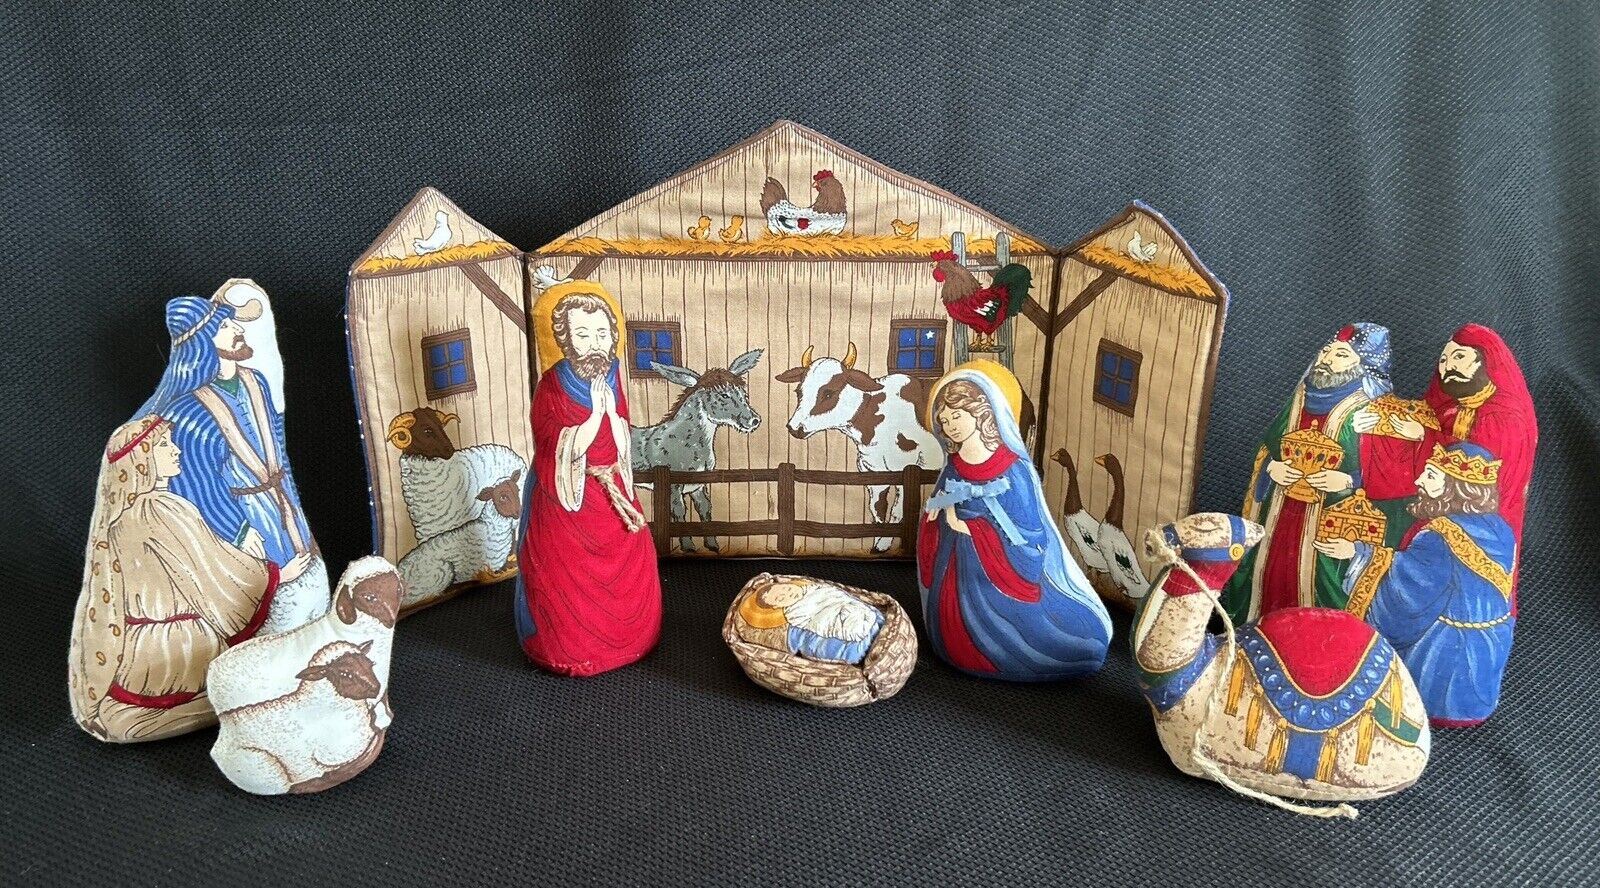 Vintage Handmade Fabric Nativity Manger Scene Display 9 Pieces Stuffed